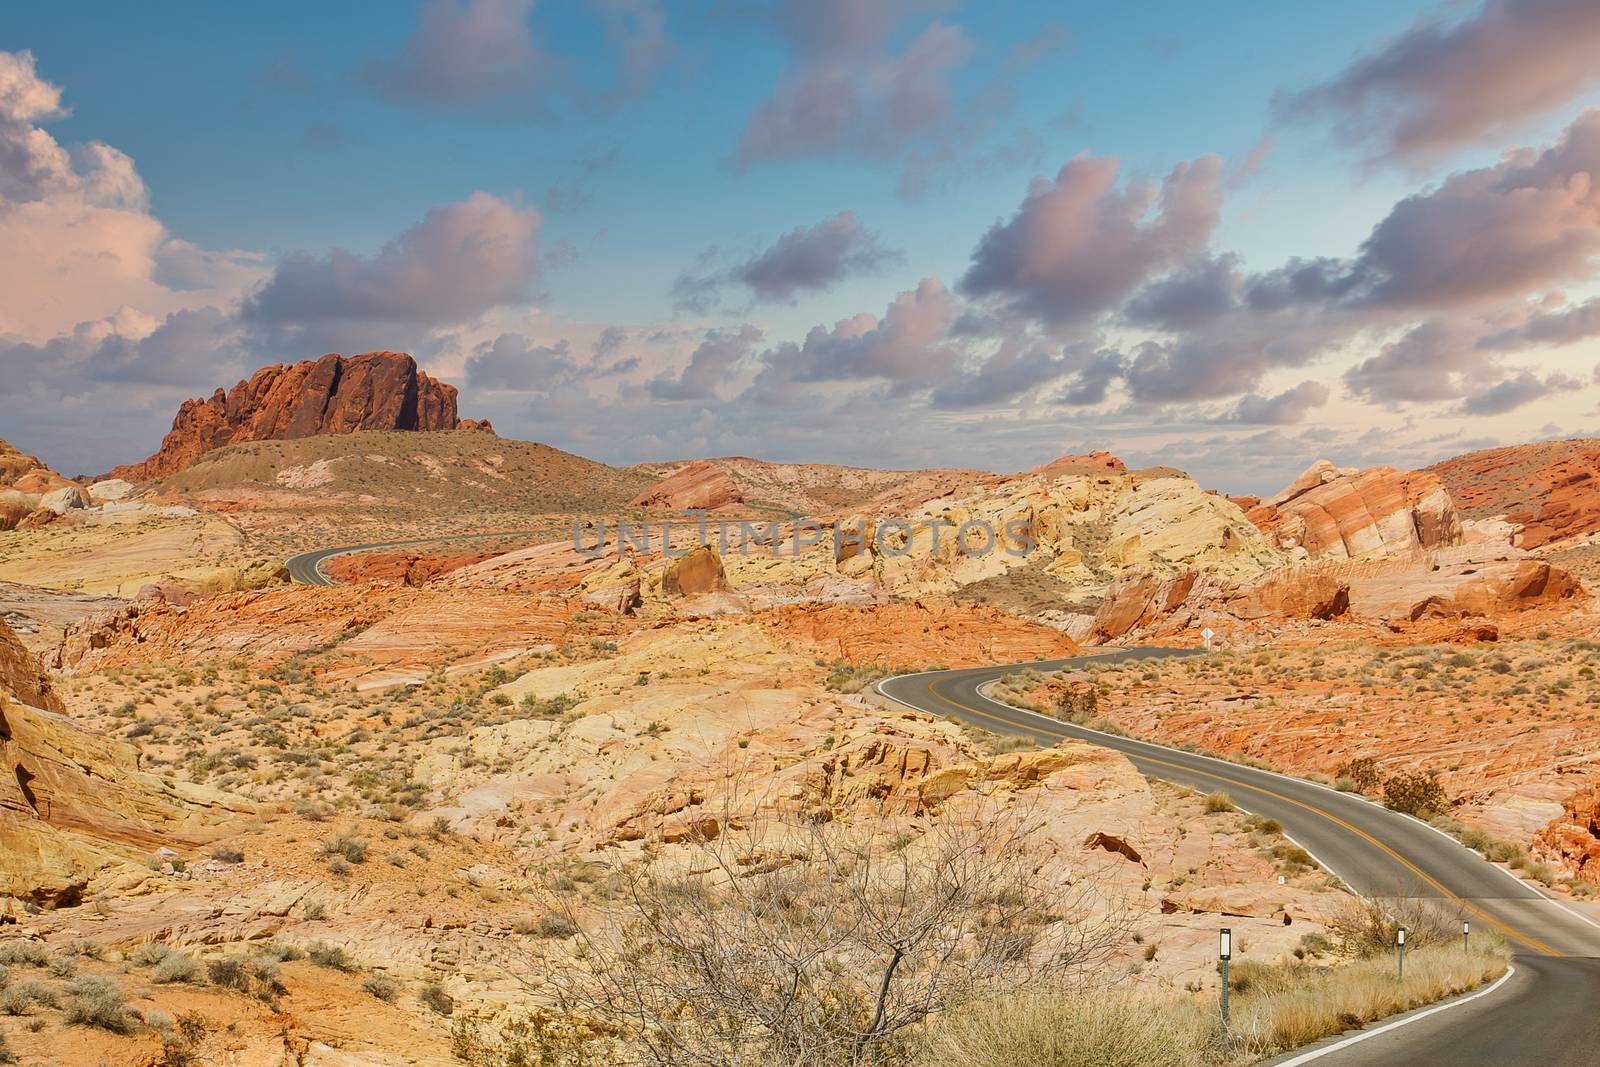 A two lane road winding through the desert near red rocks